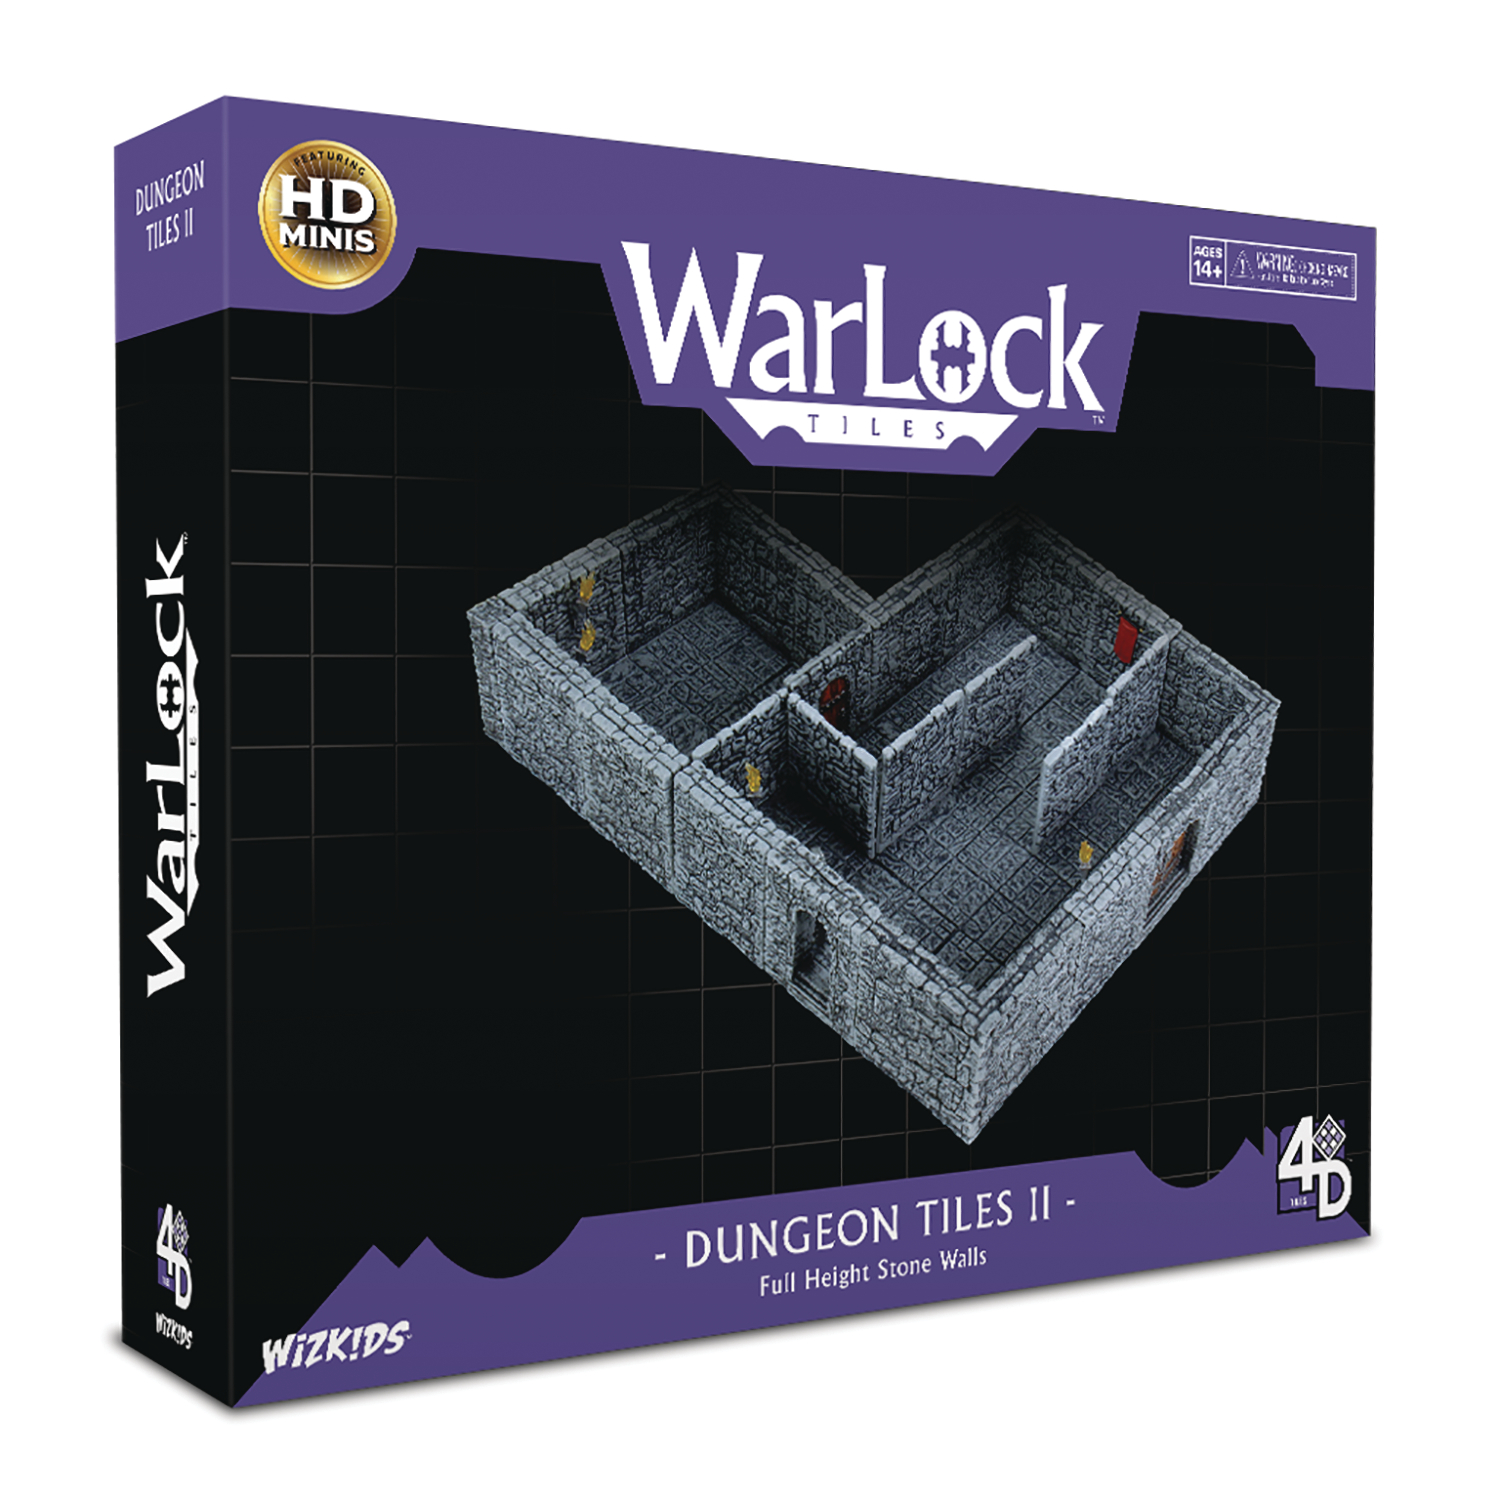 Warlock Dungeon Tiles II Full Height Stone Walls